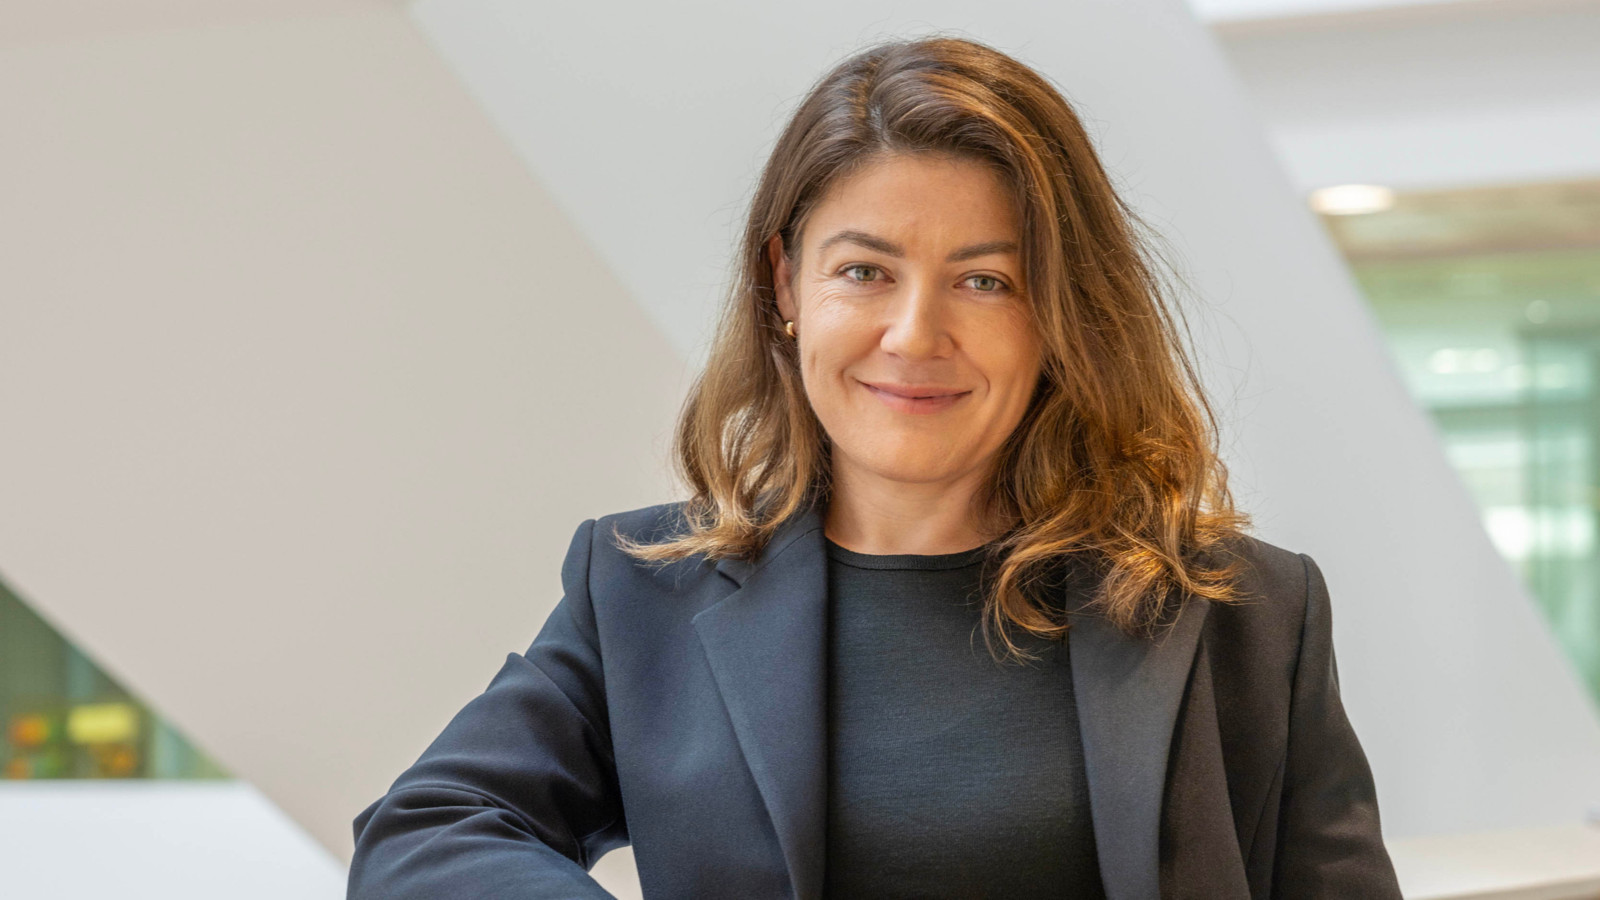 Vesna Di Tommaso ist neue CEO bei Castrol Europa